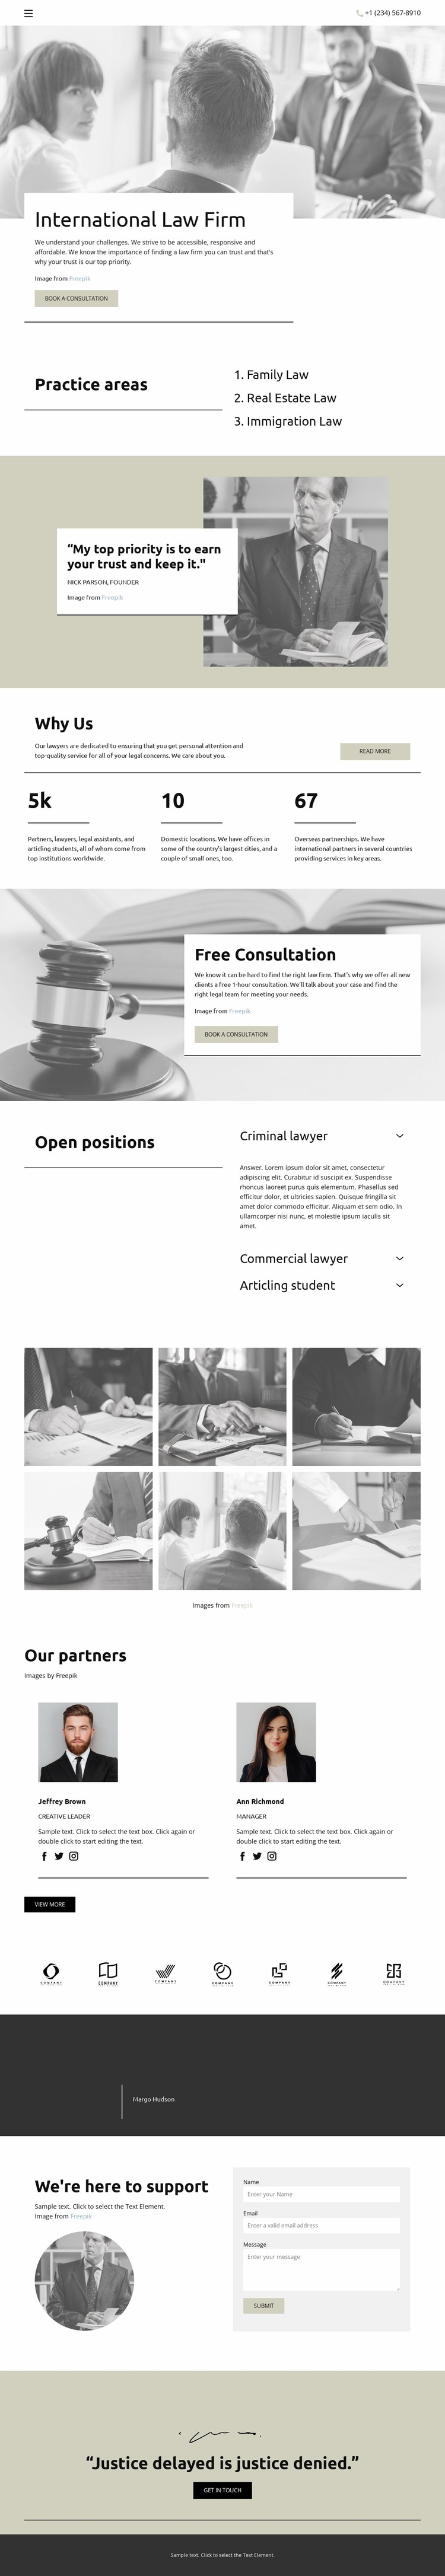 International Law Firm Website Design